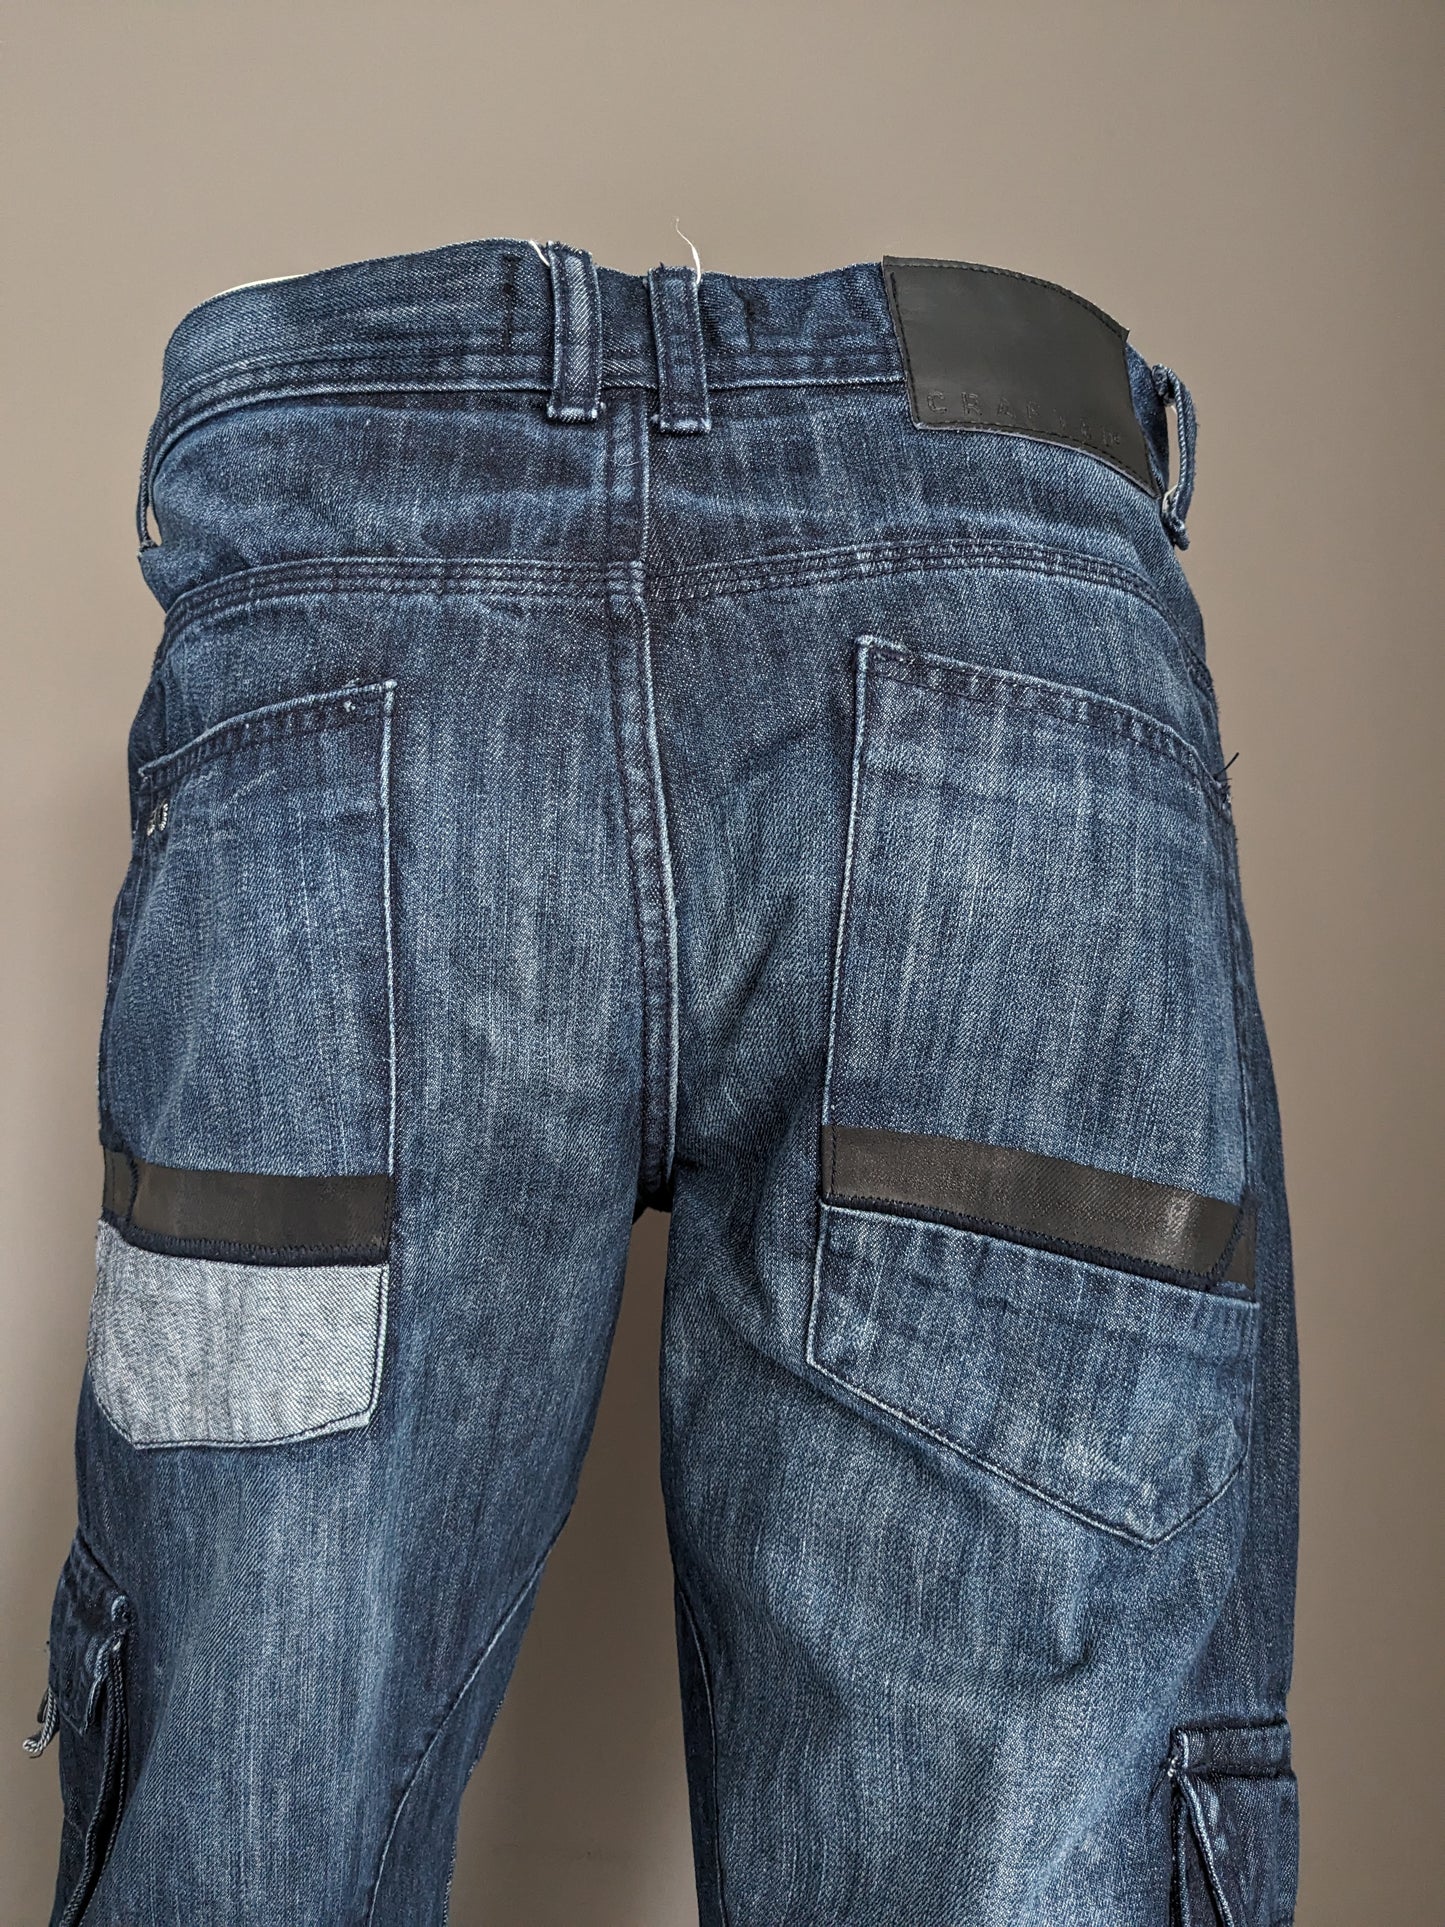 Crafted jeans. Donker Blauw gekleurd. Maat W32 - L34.